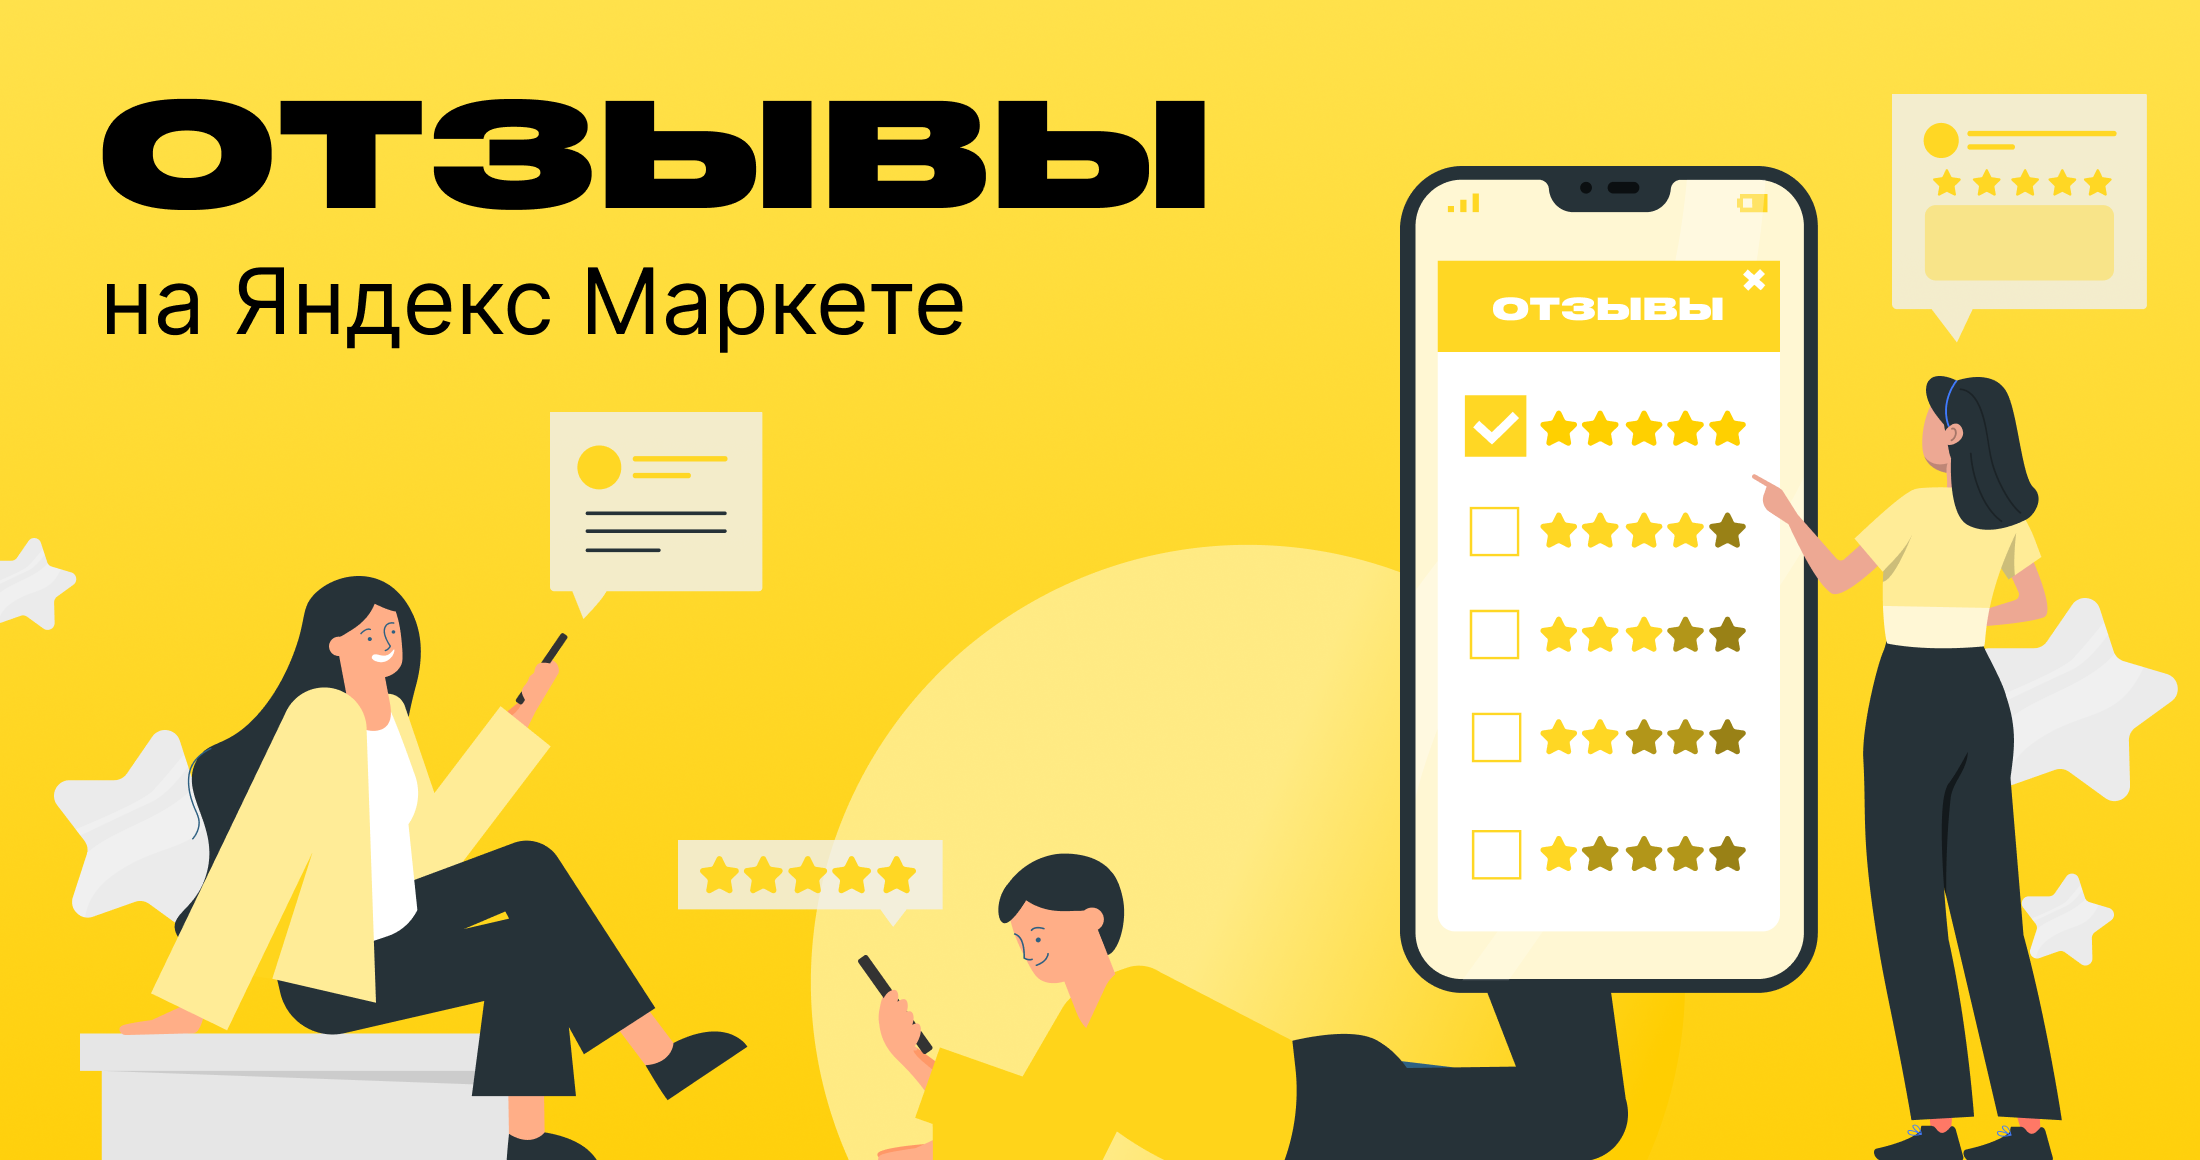 Отзывы на Яндекс Маркете